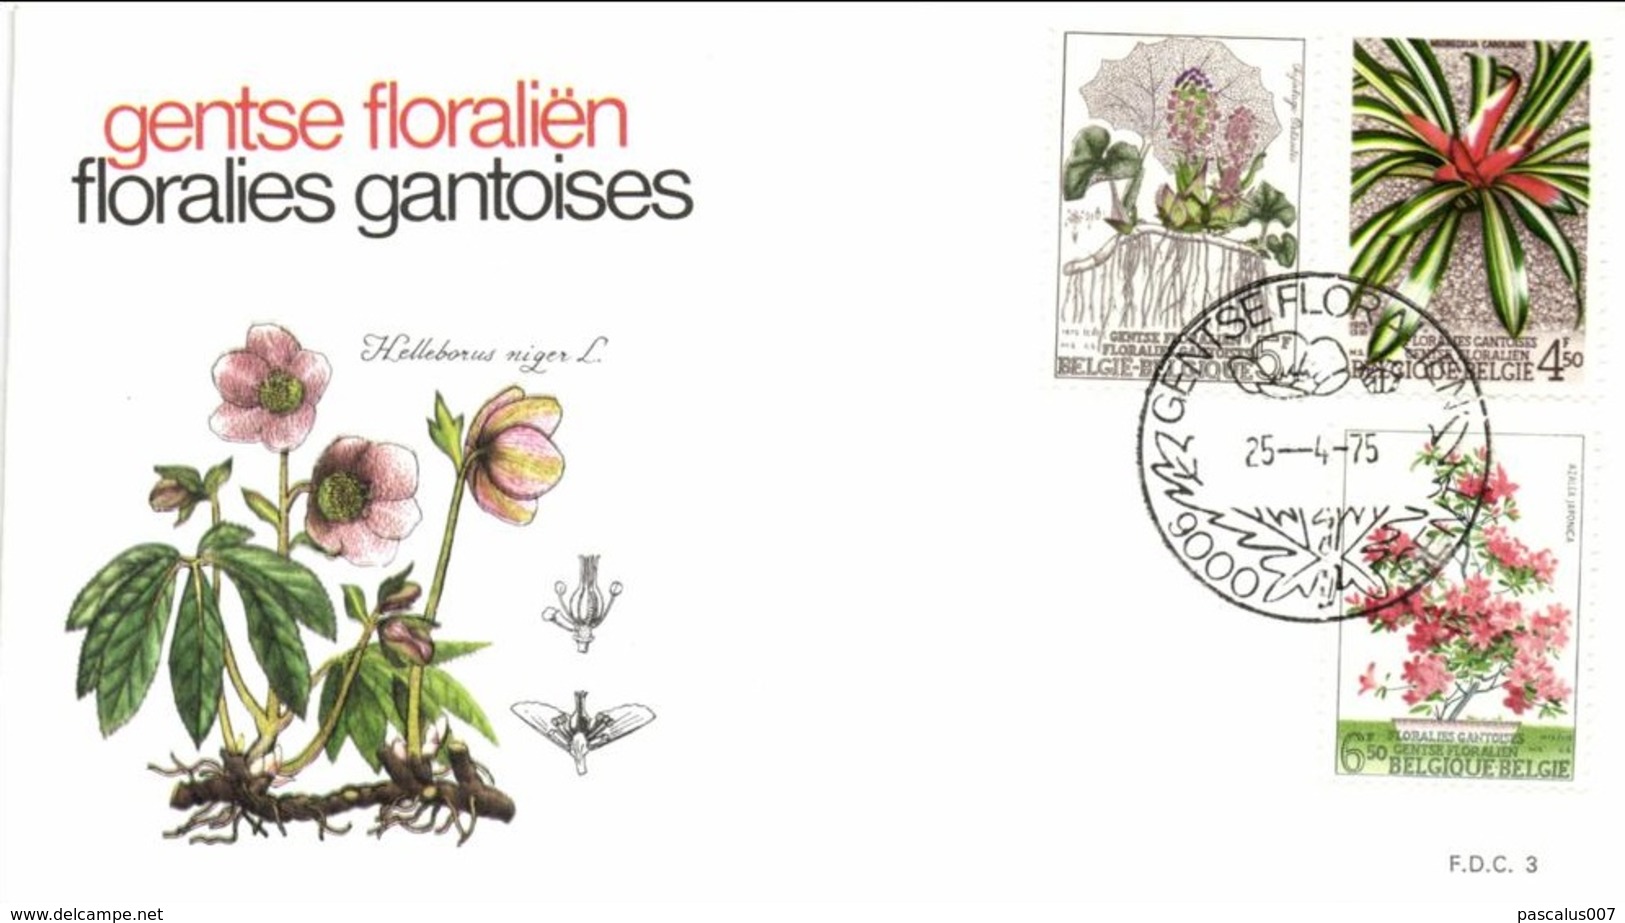 111-09 1749 1751 FDC 3 Floralie Floriade Floralies Gantoises 25-4-1975 9000 Gent - Unclassified